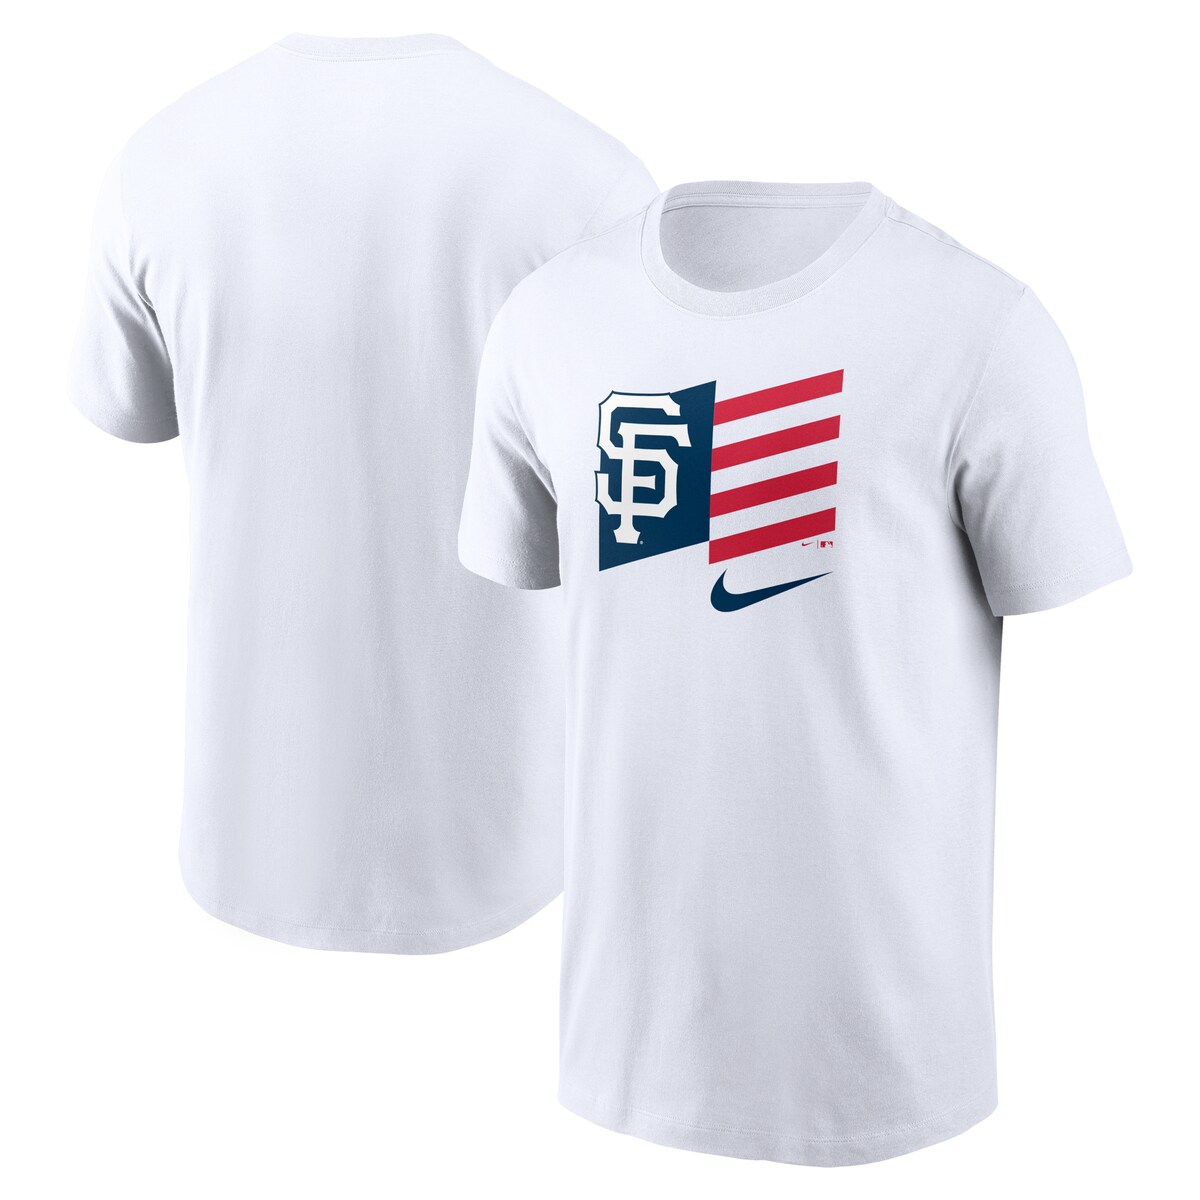 MLB ジャイアンツ Tシャツ Nike ナイキ メンズ ホワイト (Men's Nike Americana Flag Short Sleeve Cotton Tee)